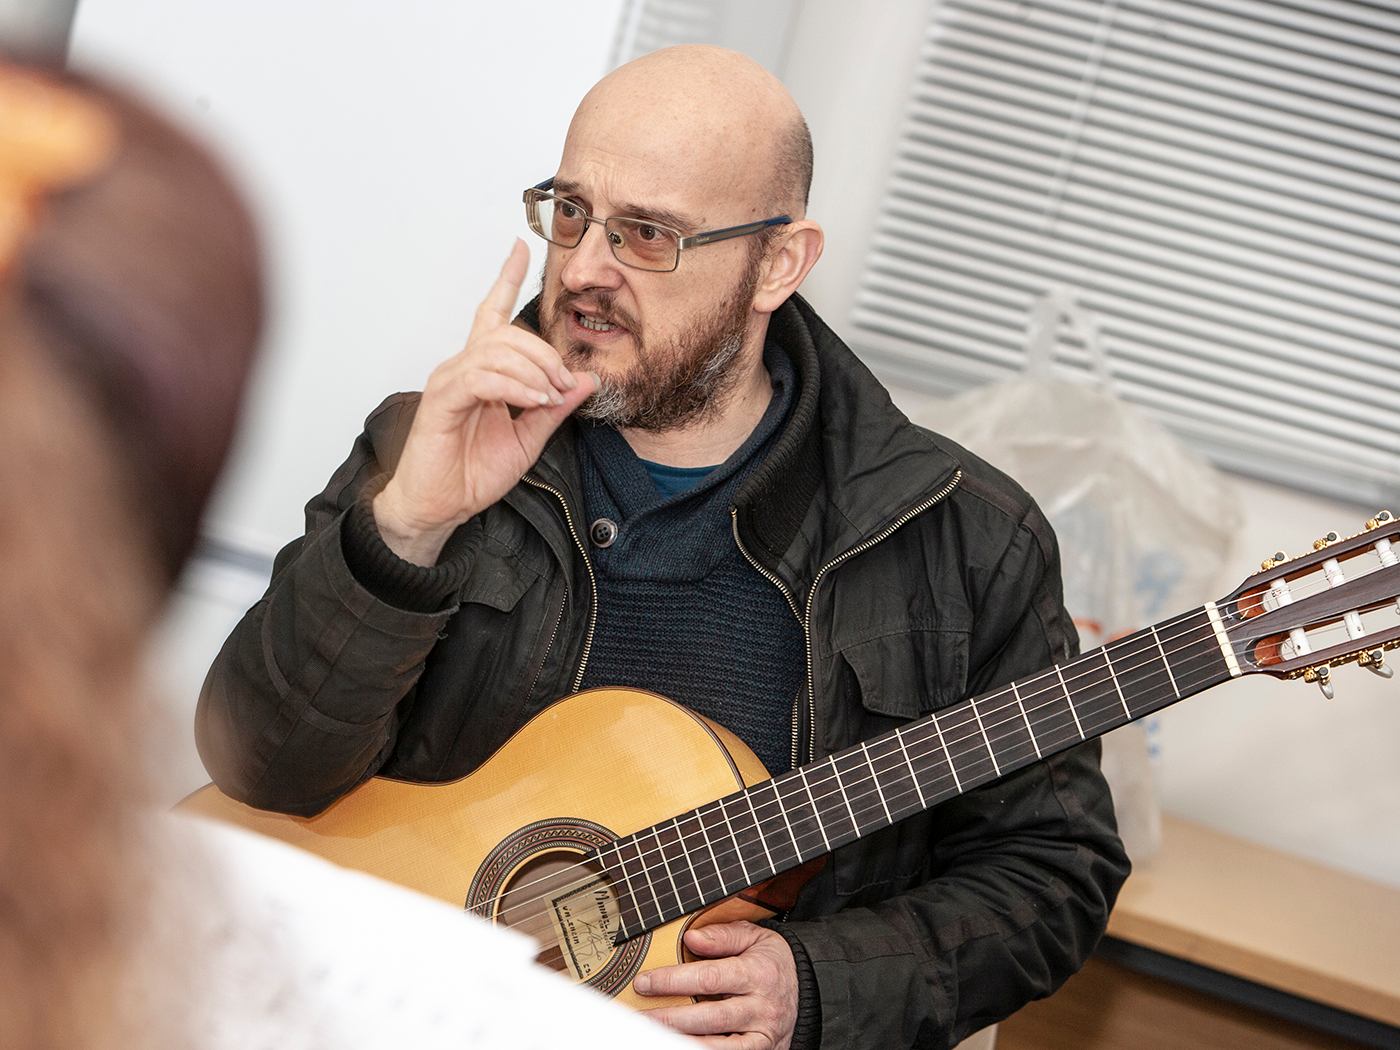 Guitar tutor making a point in workshop